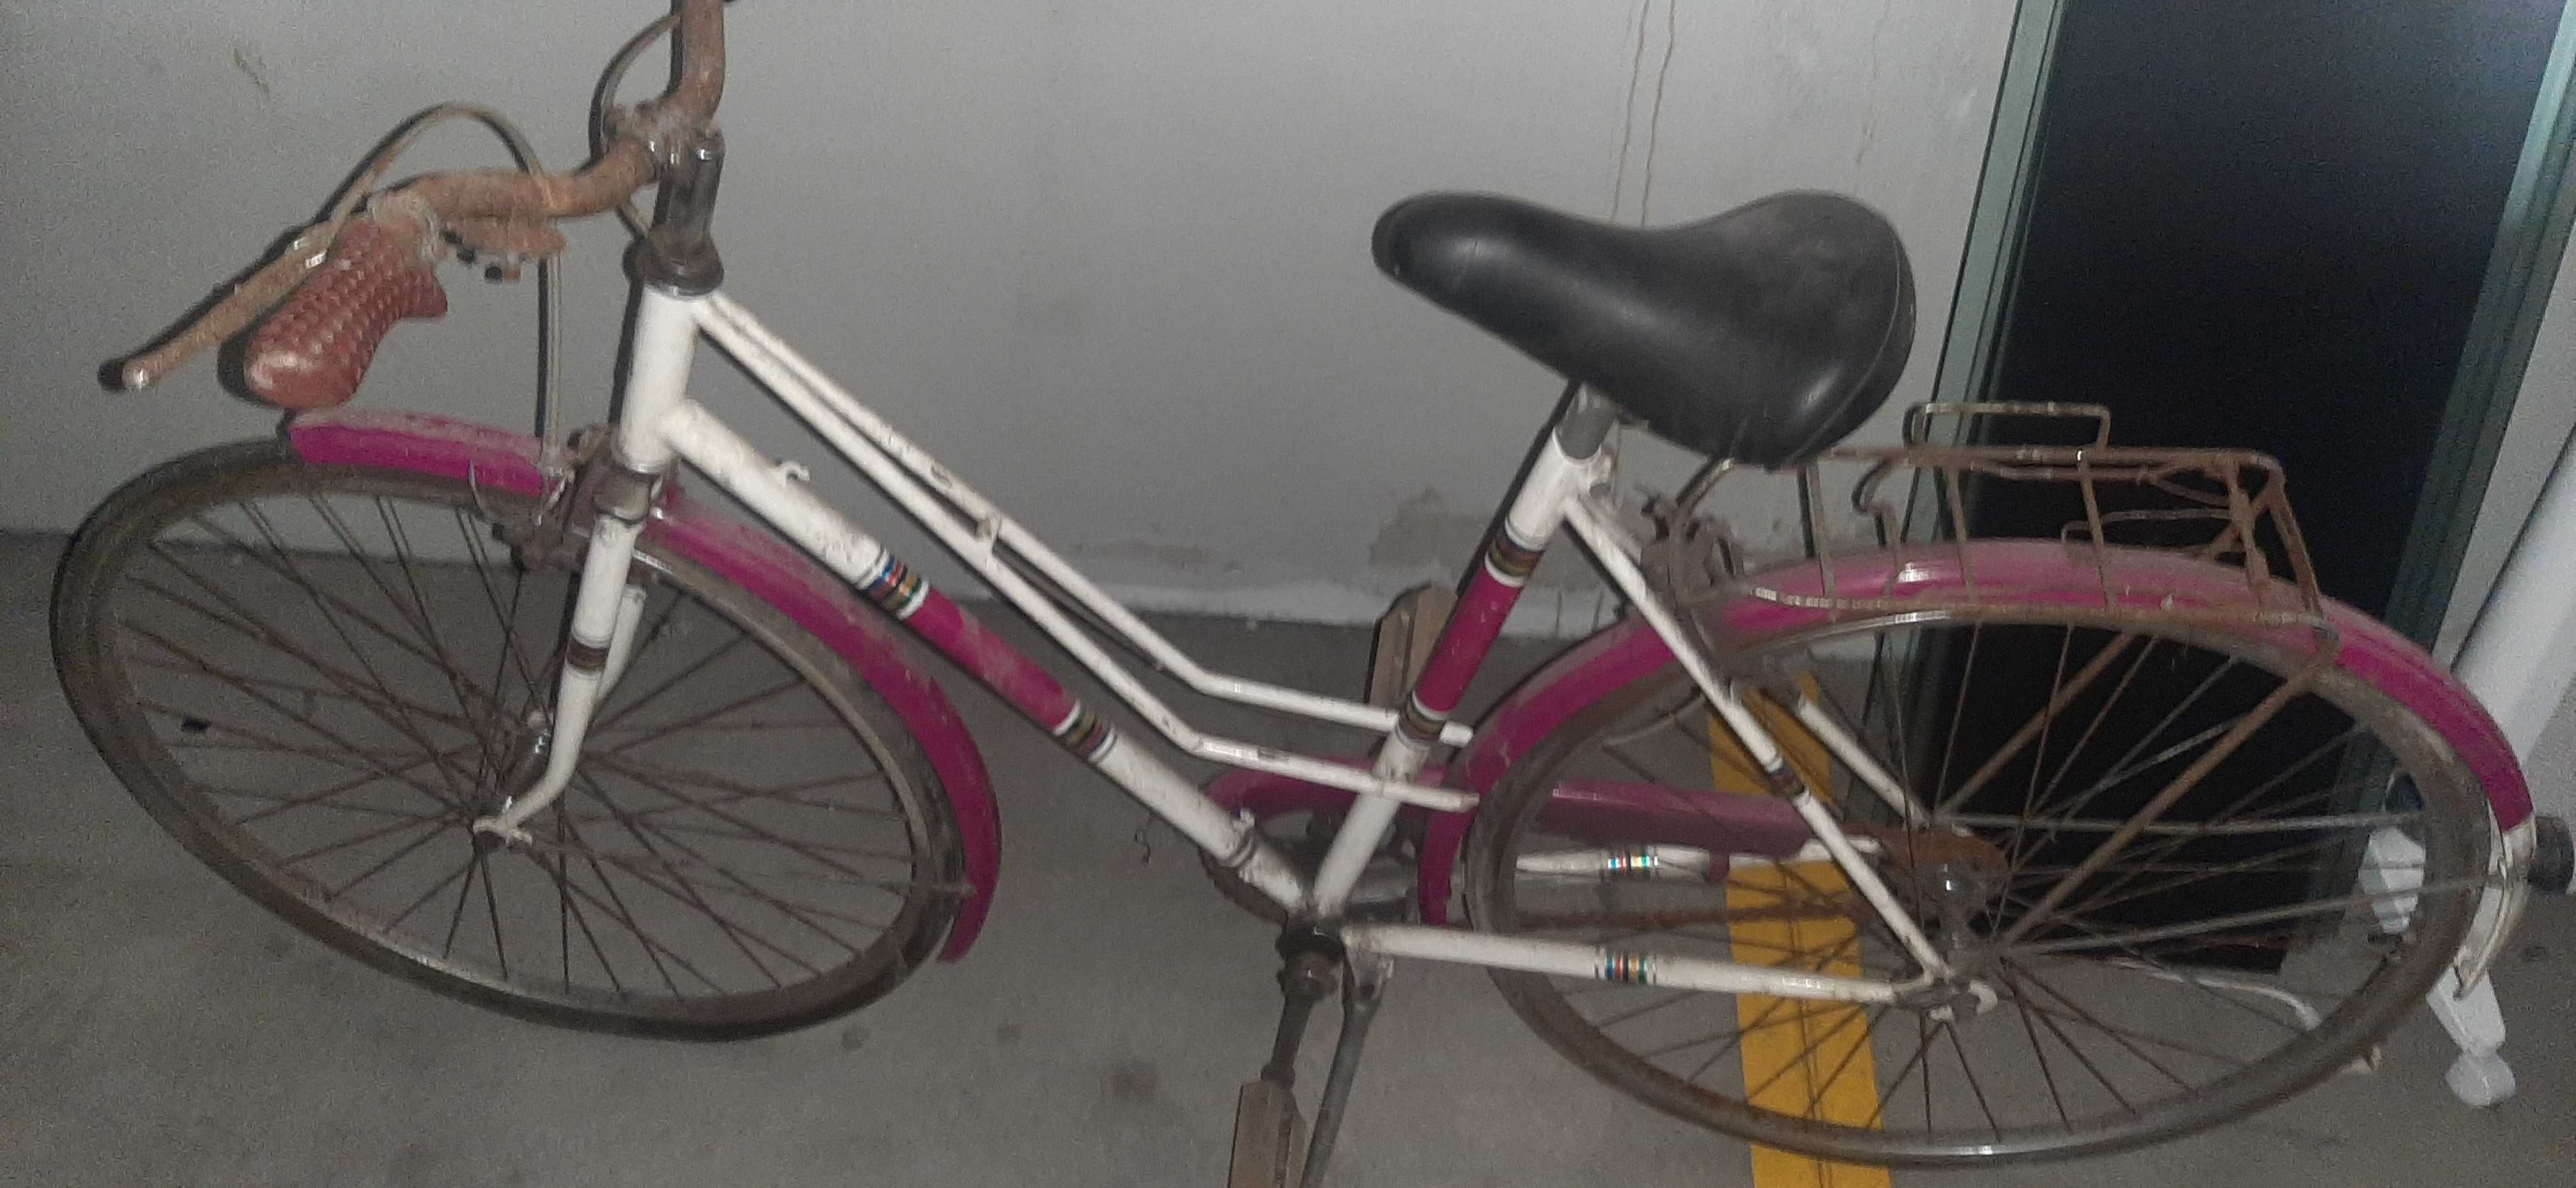 Bicicleta de senhora vintage